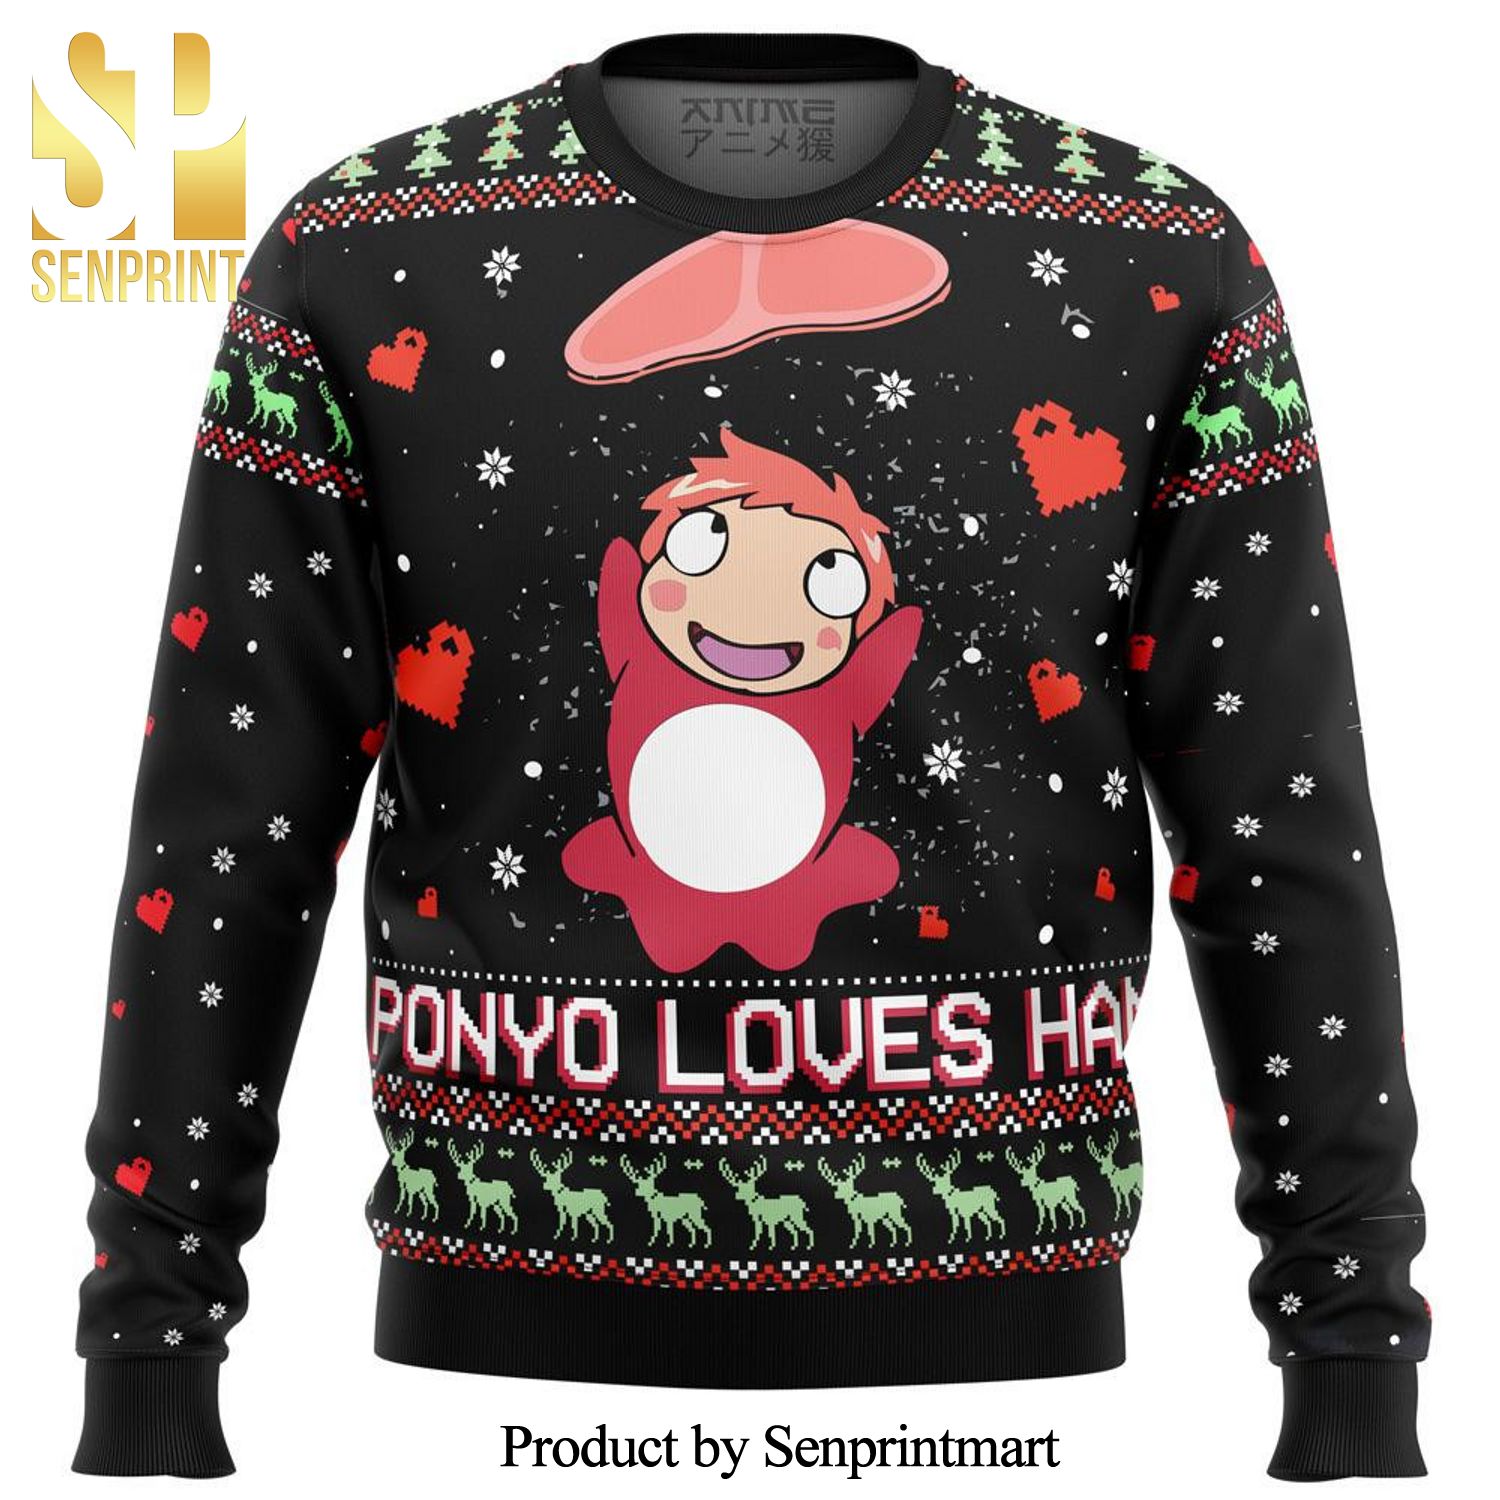 Ghibli Ponyo Loves Ham Manga Anime Knitted Ugly Christmas Sweater